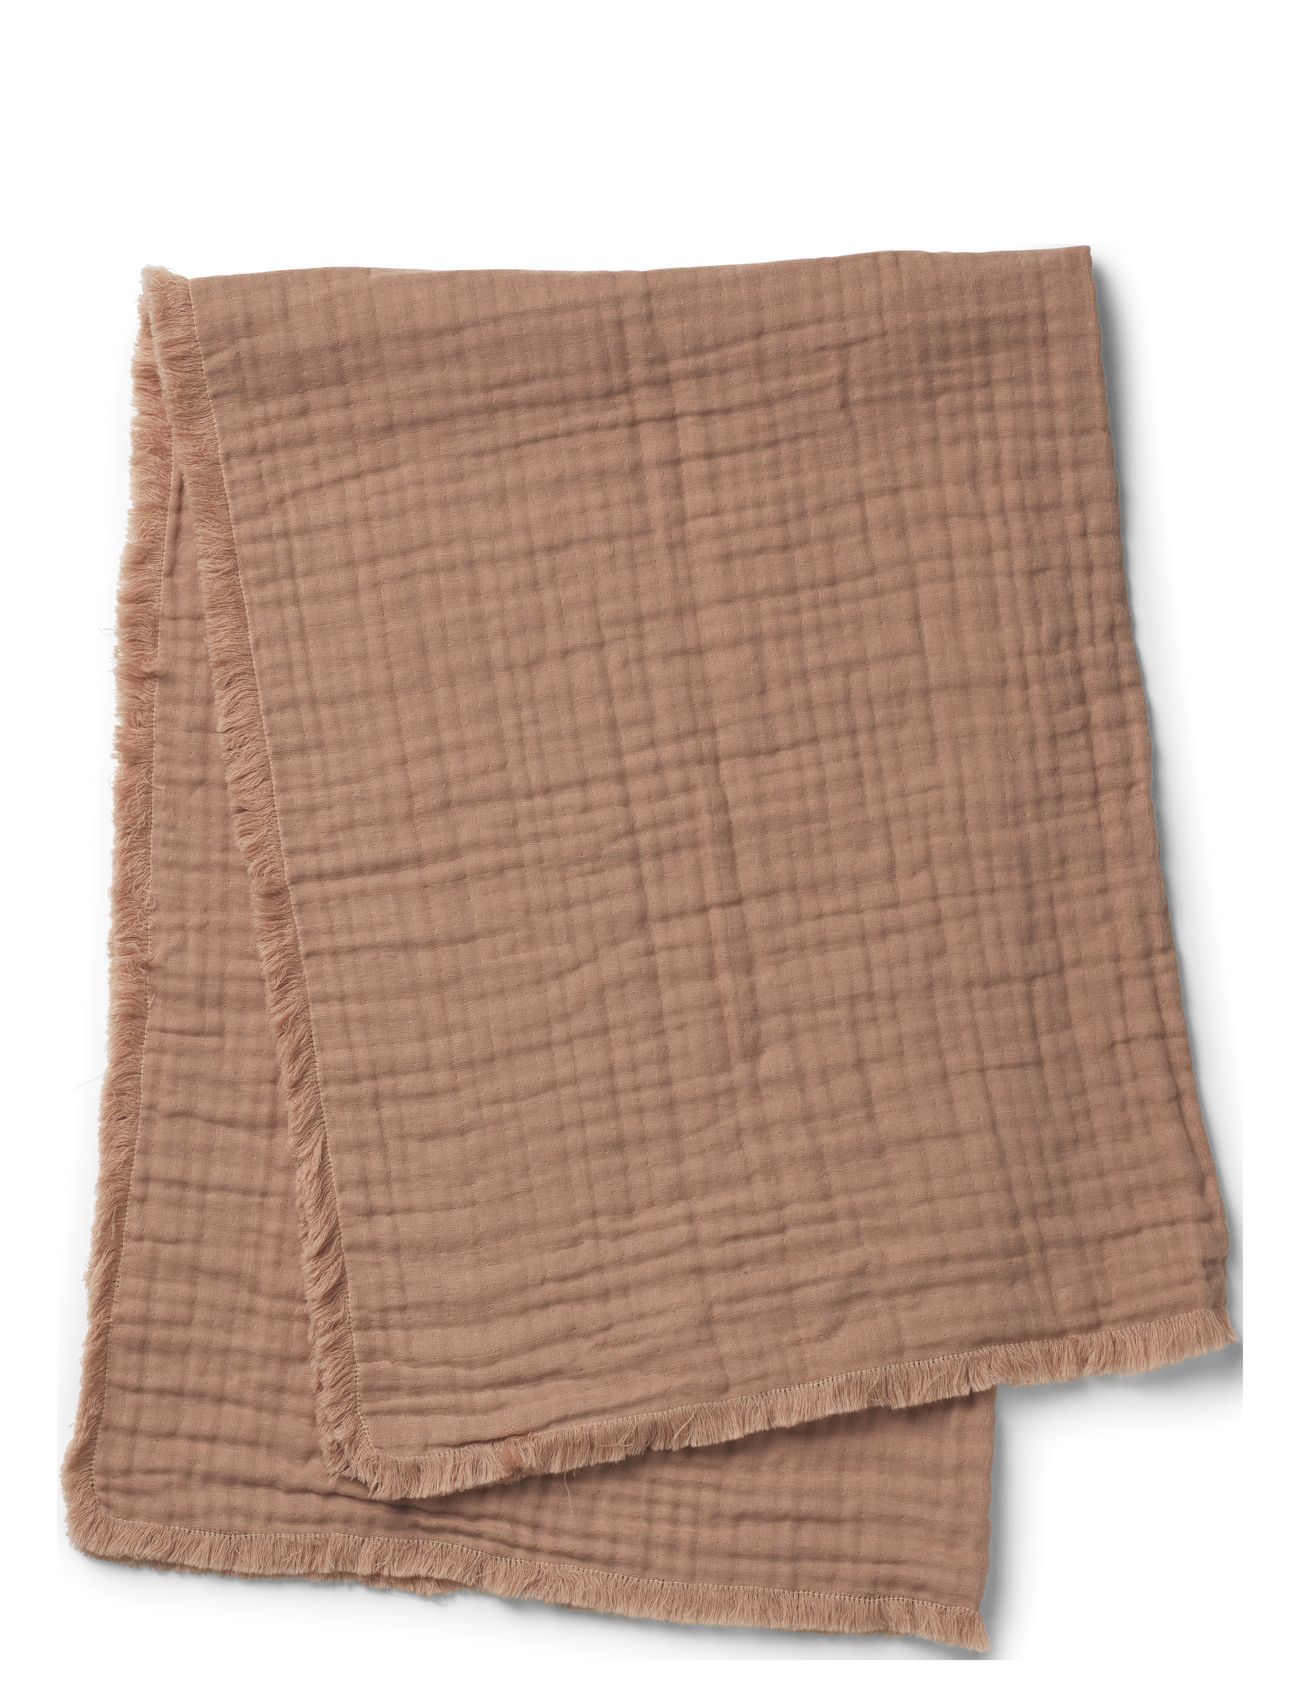 "Elodie Details" "Soft Cotton Blanket Baby & Maternity Sleep Blankets Brown Elodie